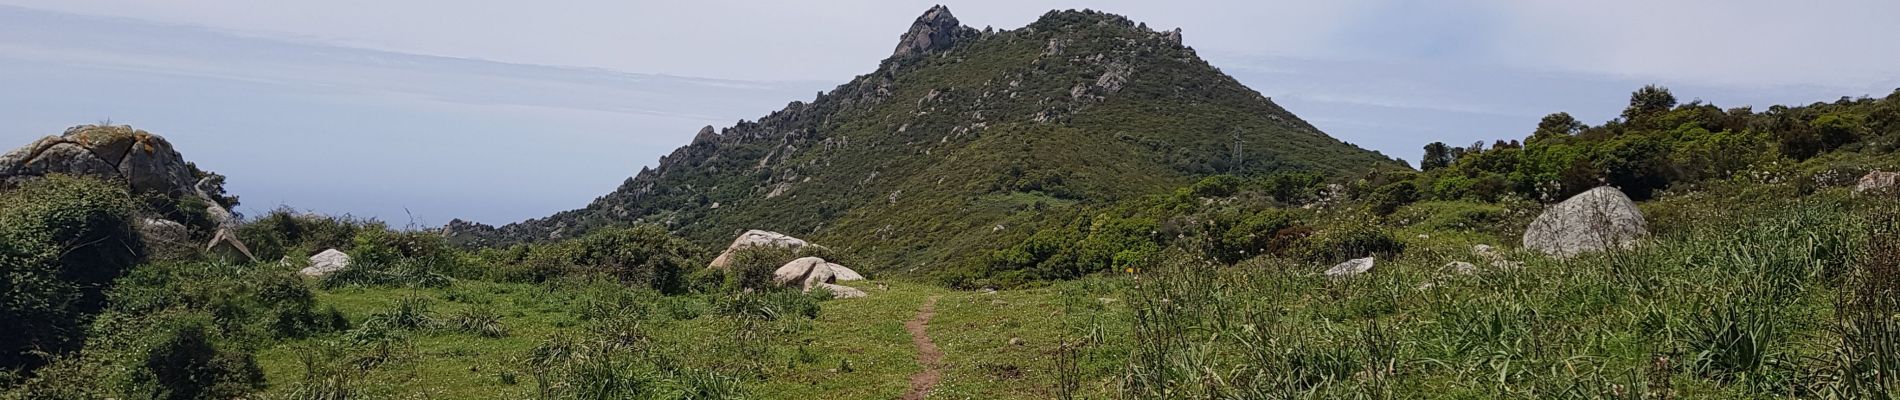 Tour Wandern Ajaccio - Crète de la punta Lisa Antenne  - Photo